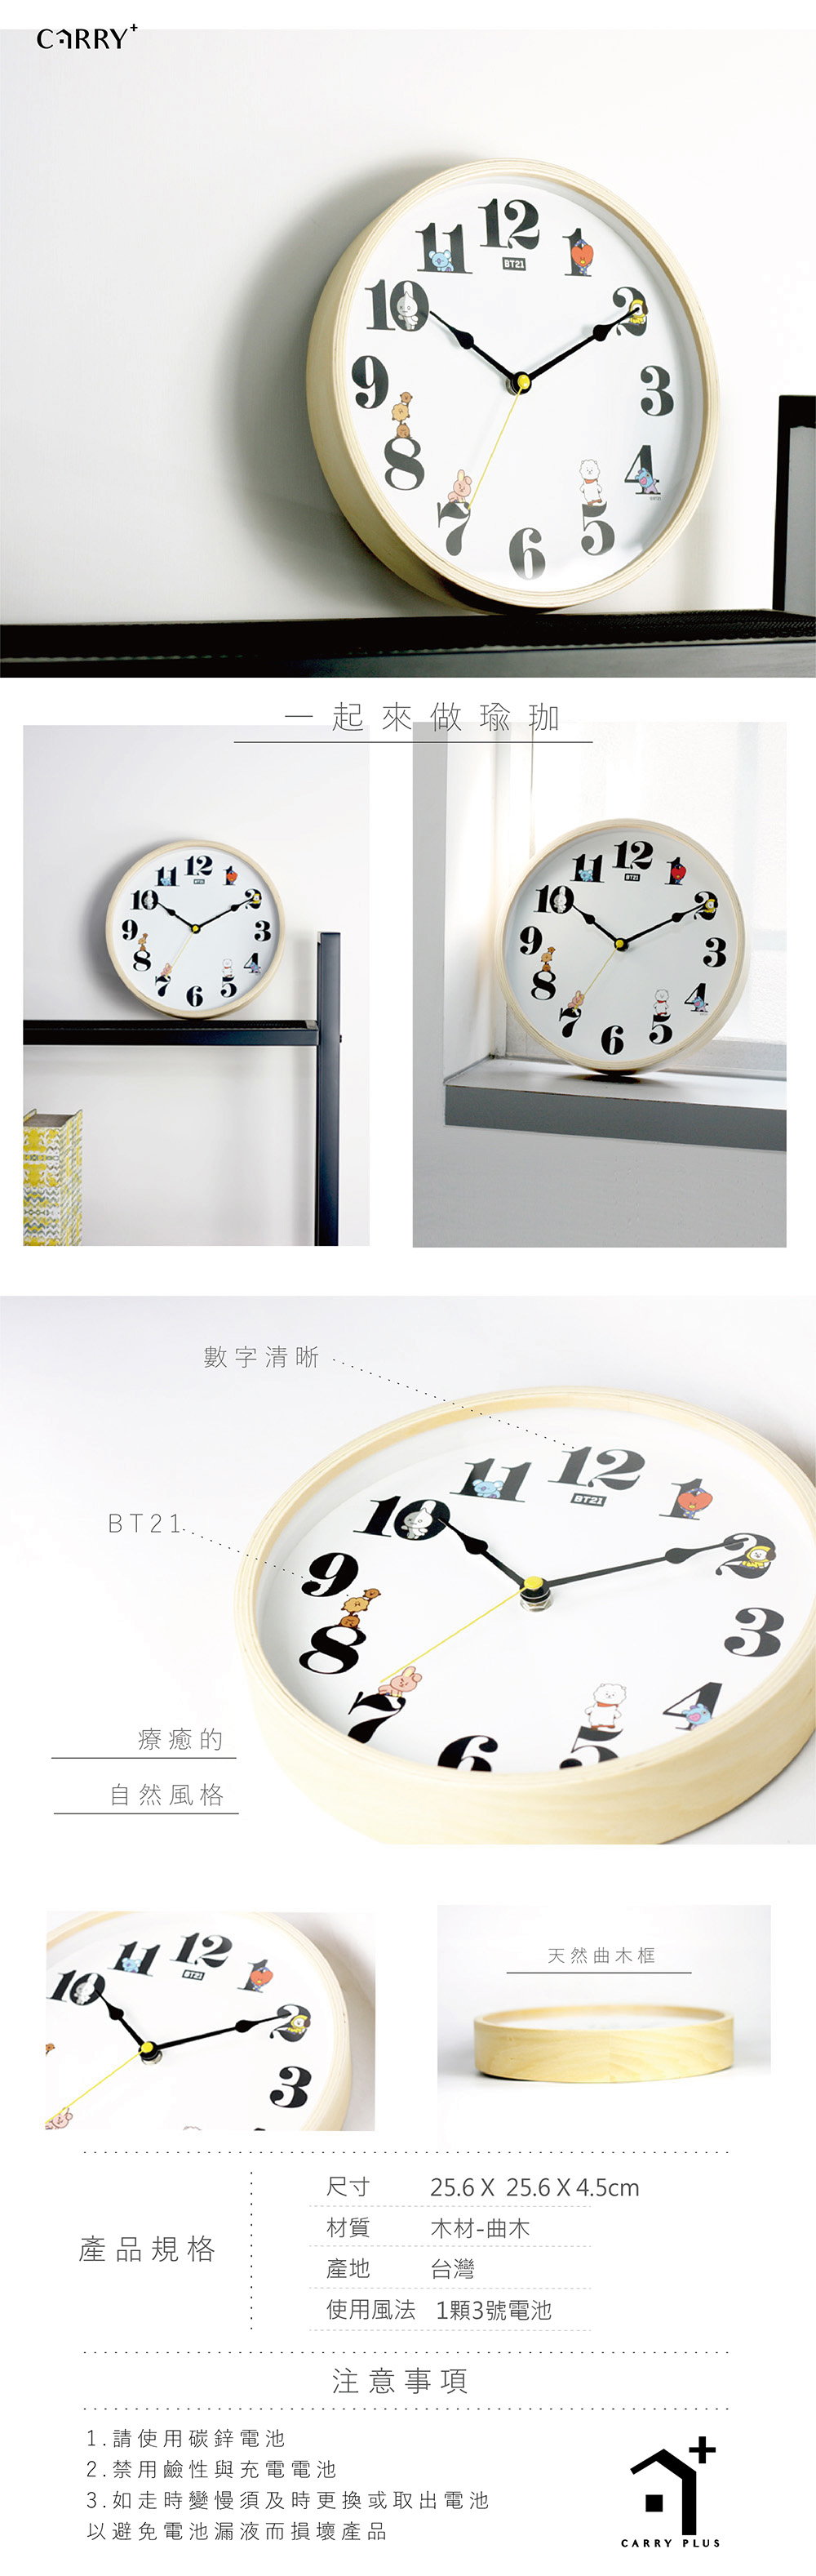 BT21 yoga2 wall clock  -1000pt